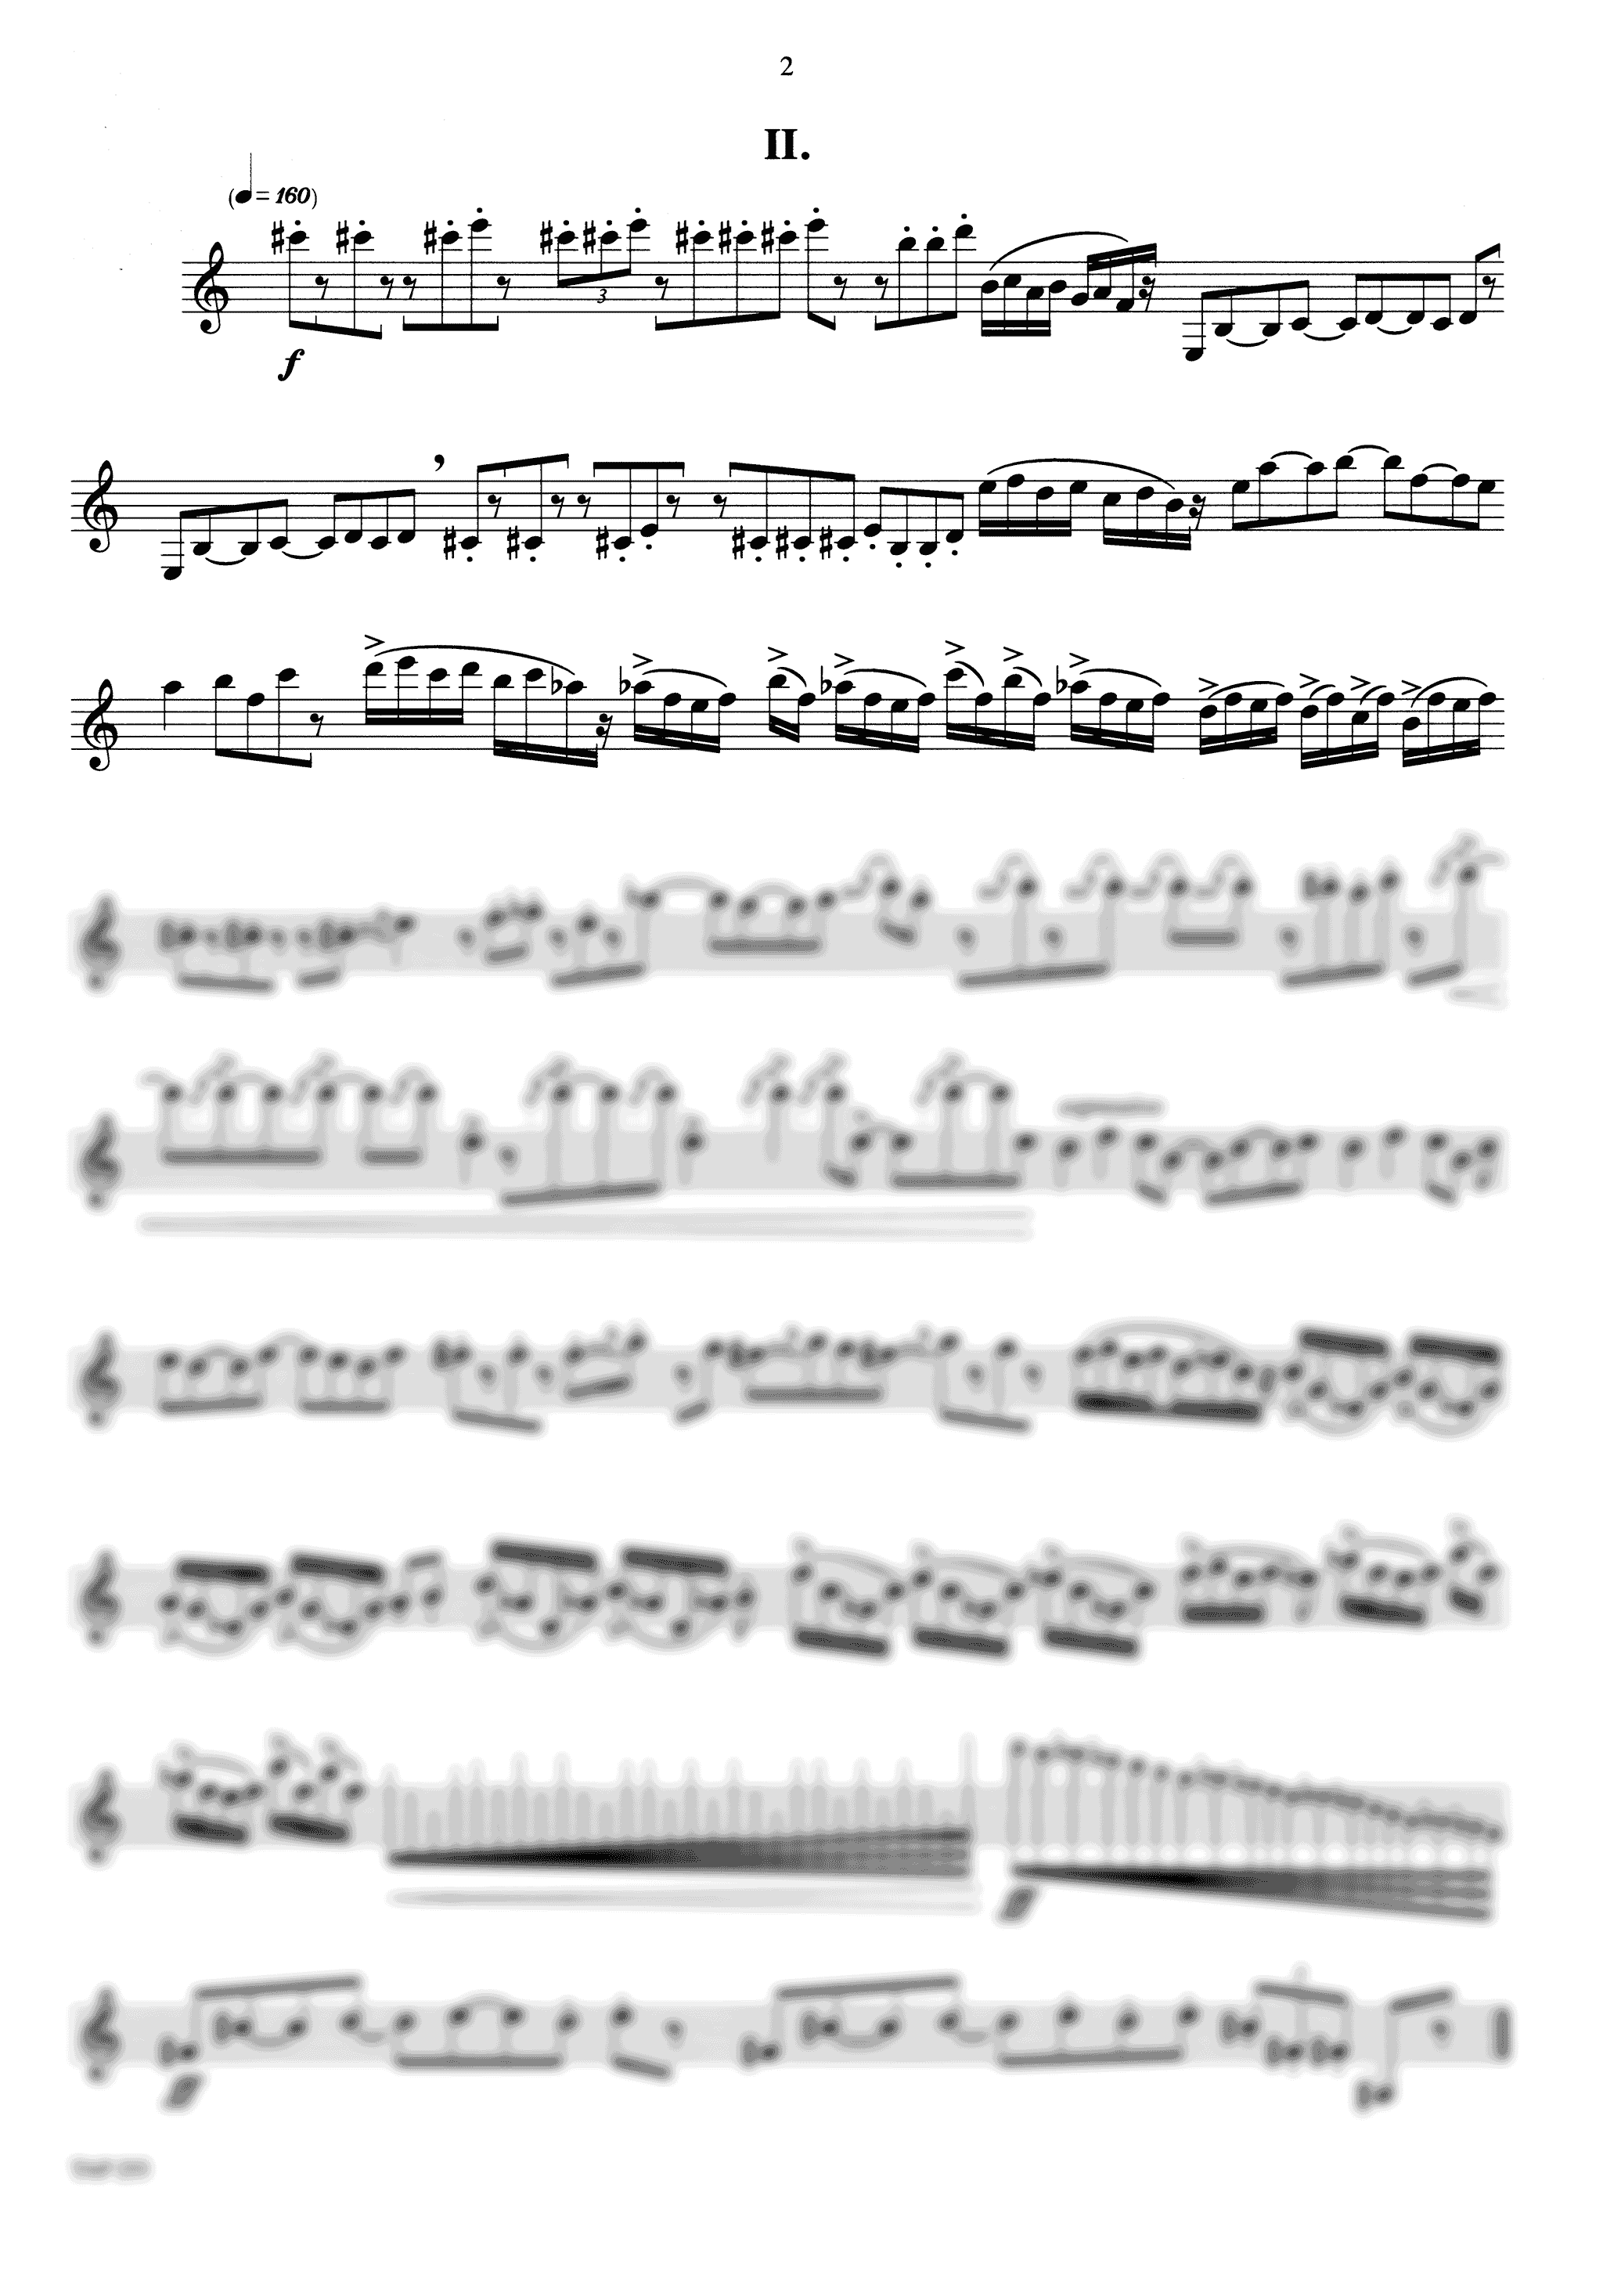 Bodorová Saluti da Siena unaccompanied clarinet - Movement 2